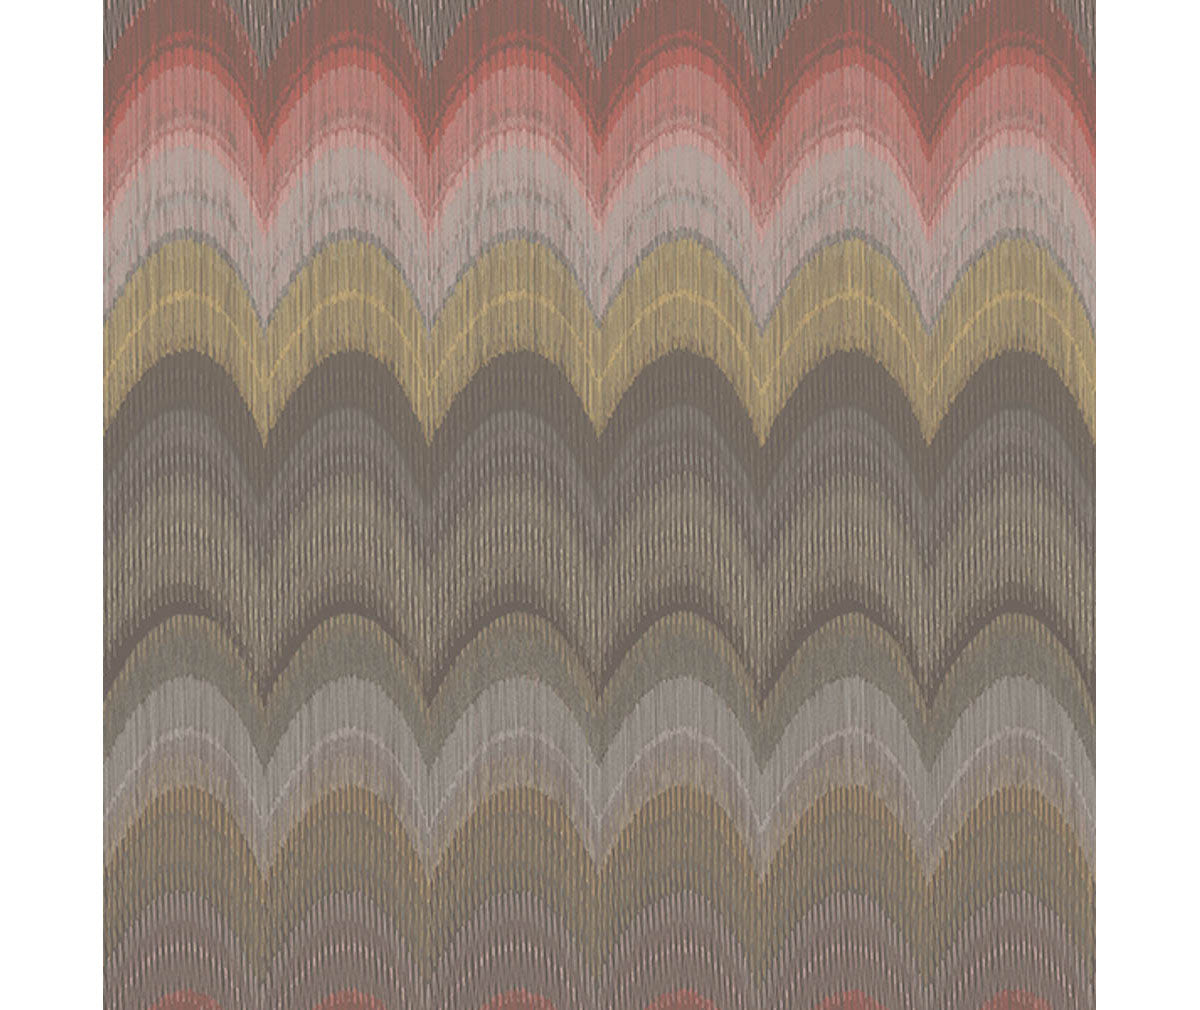 August Brown Wave Wallpaper